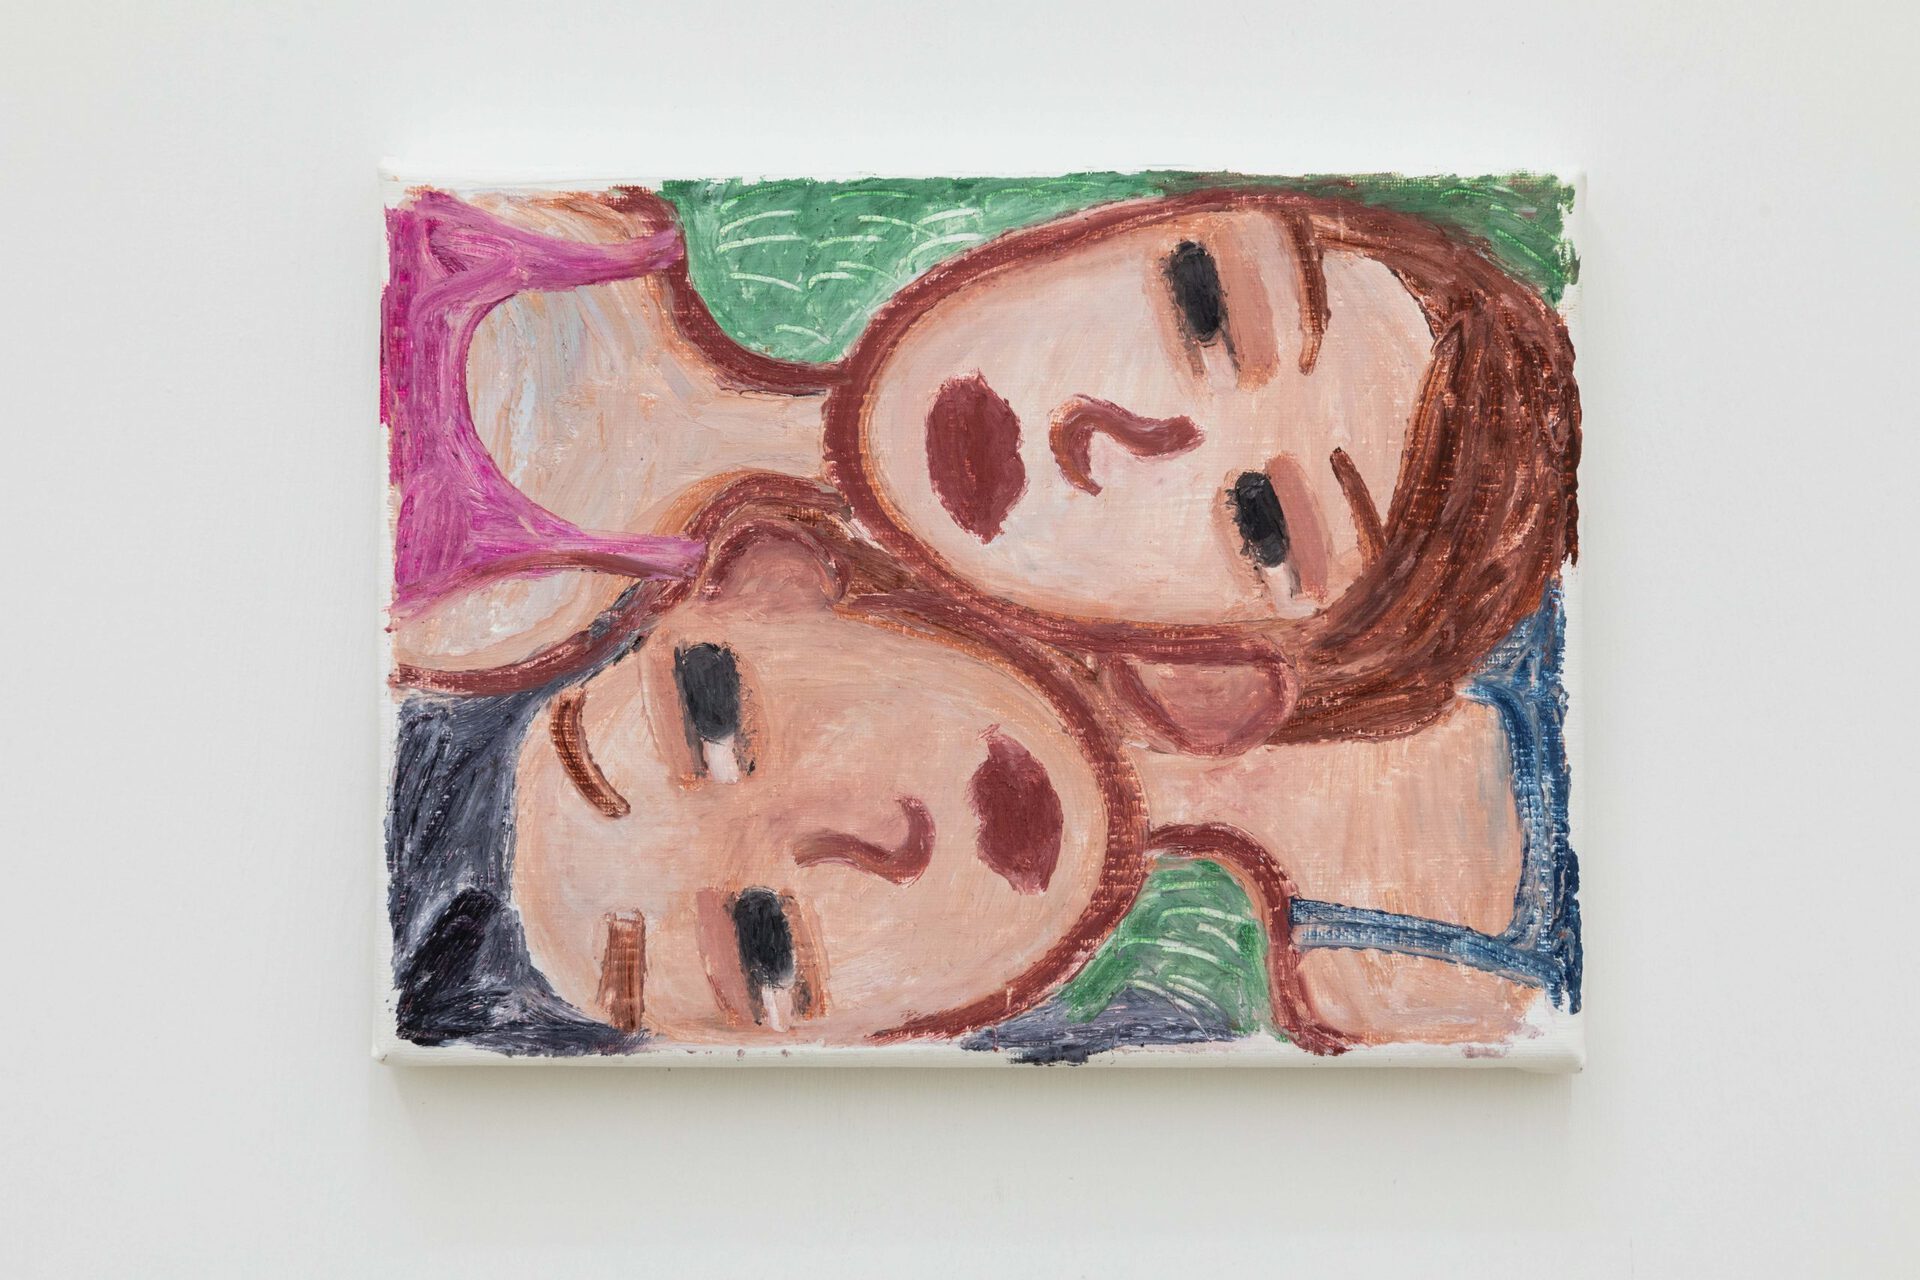 Tatiana Defraine, Dreamers are my fav, 2021, Oil Pastel on canvas, 15x20cm